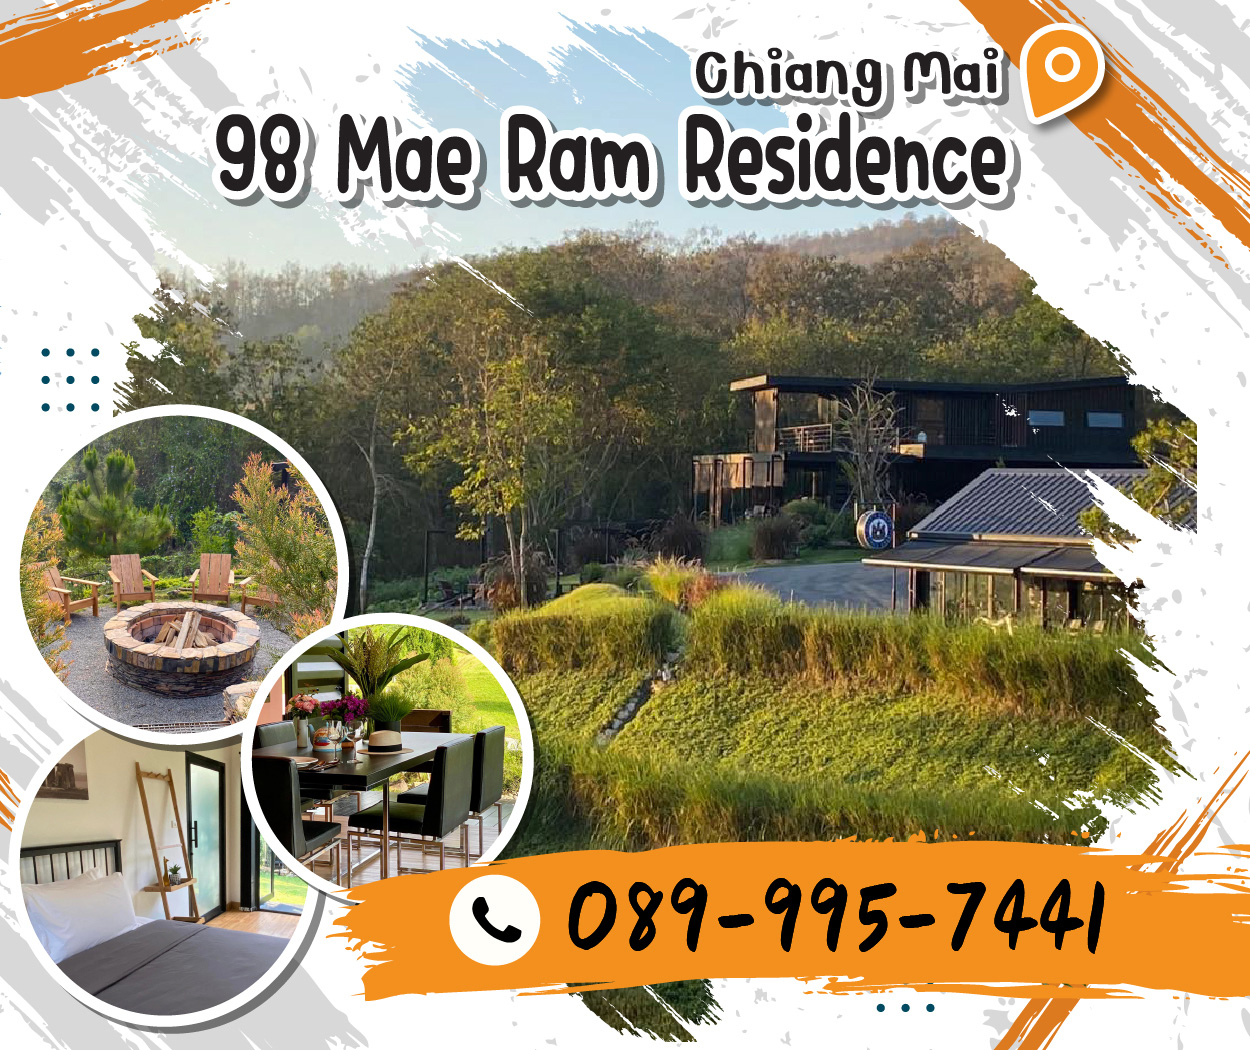 98 Mae Ram Residence Chiang Mai